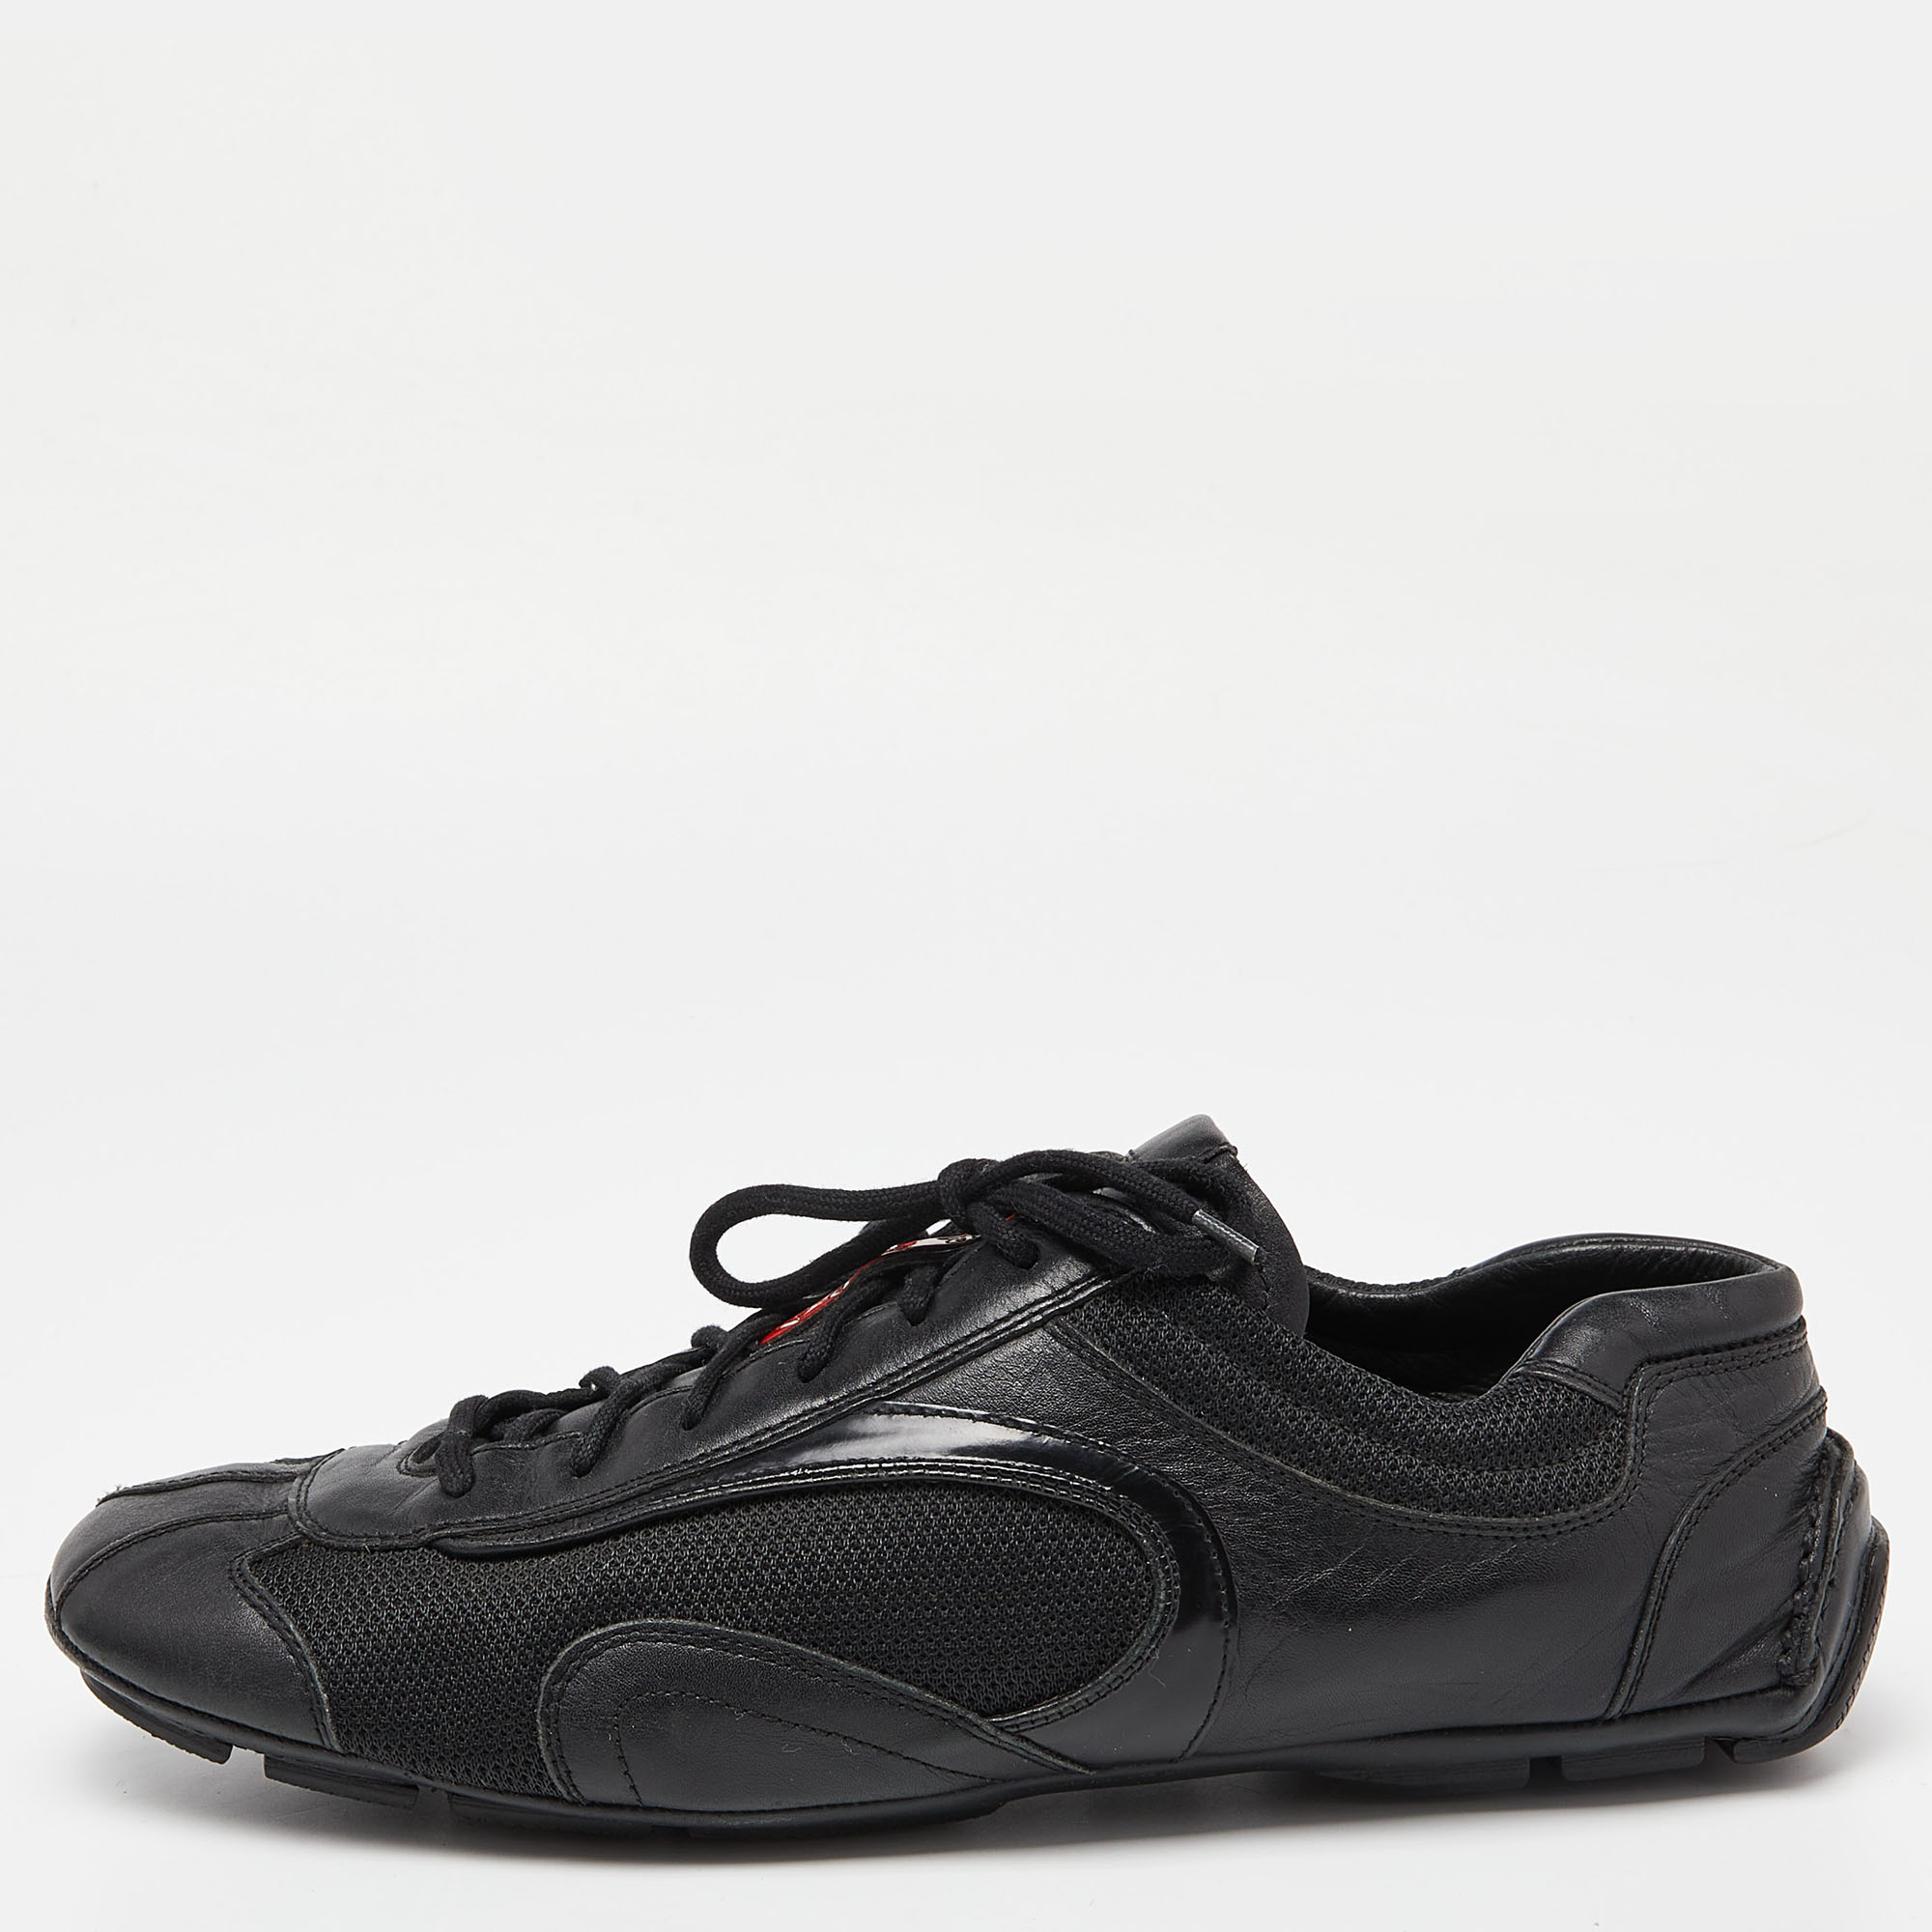 Prada sport black leather low top sneakers size 45